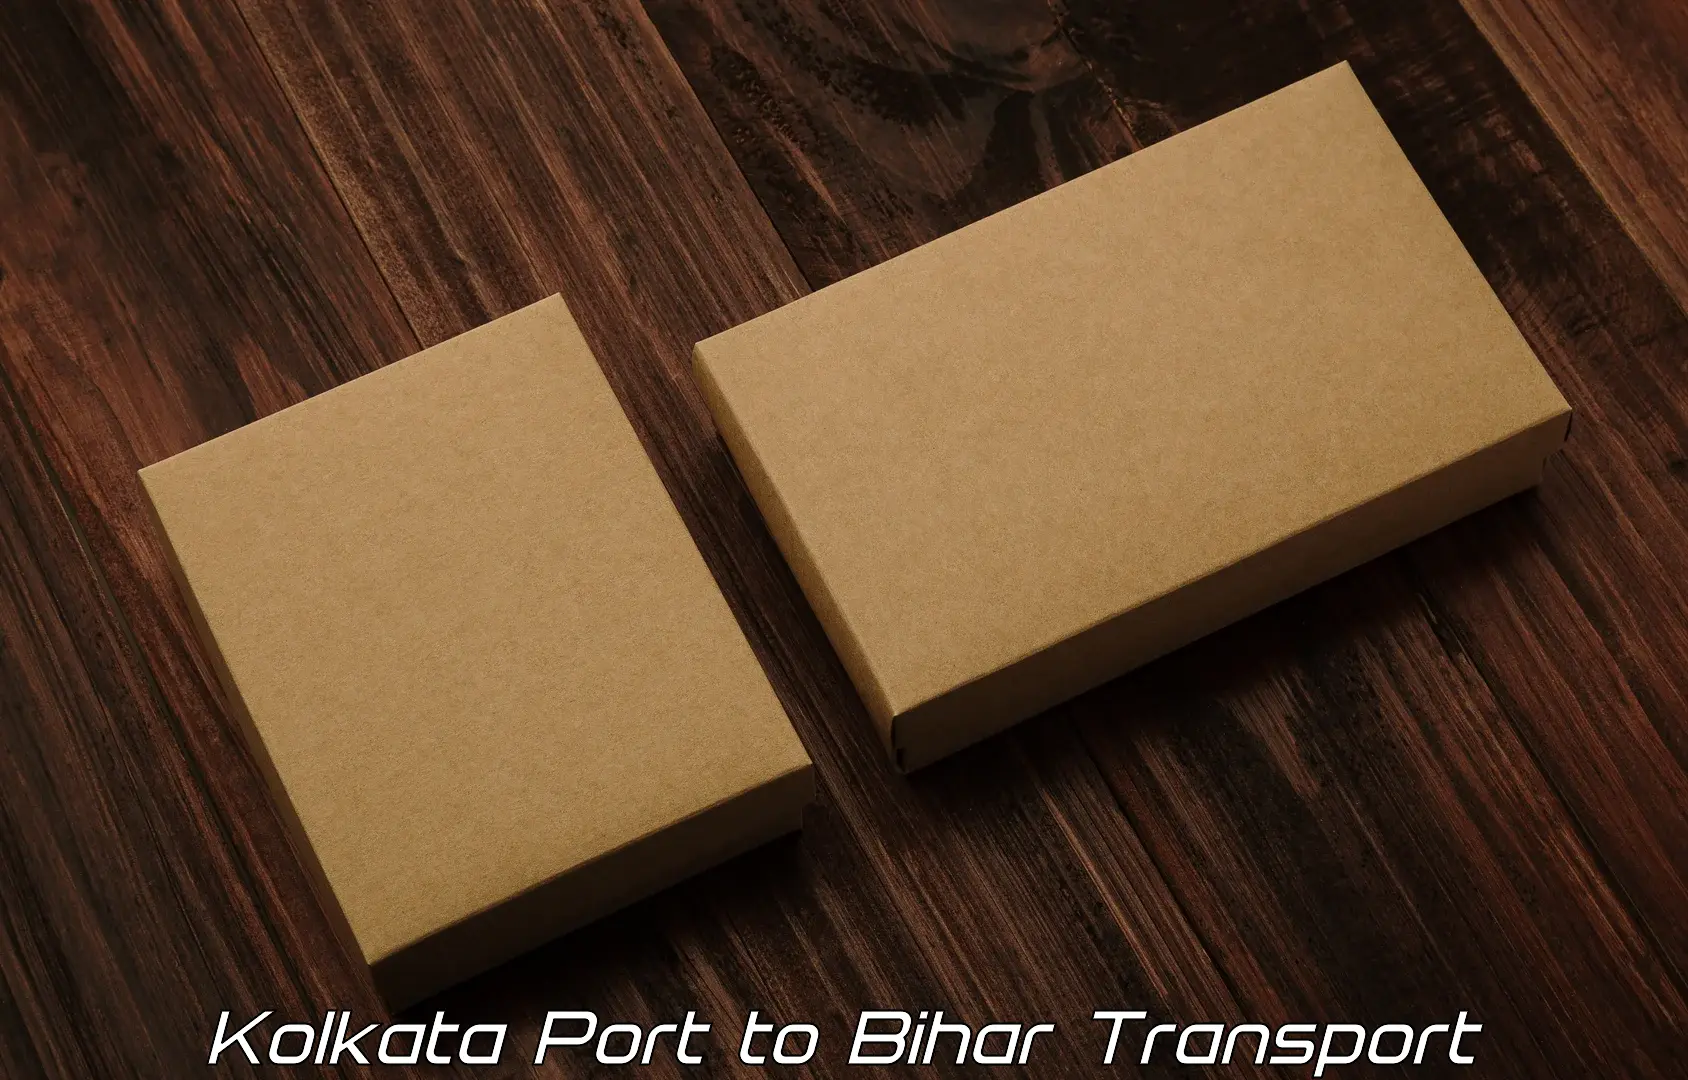 Express transport services Kolkata Port to Chakai